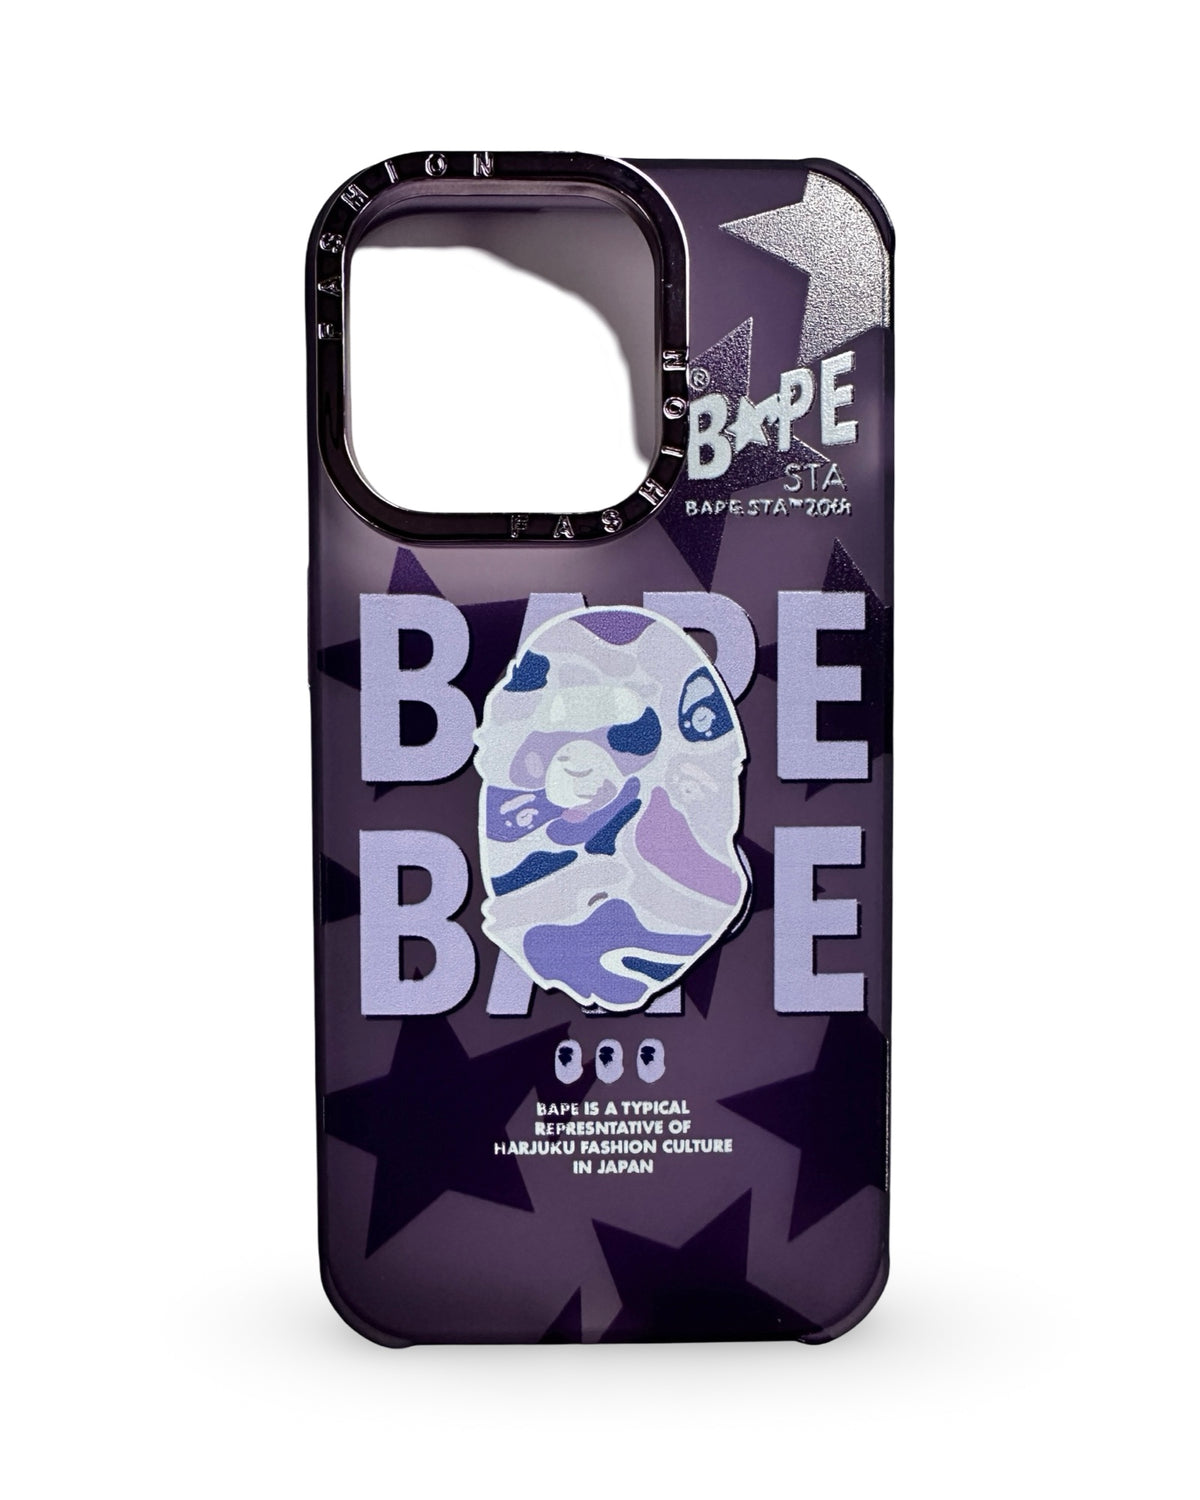 CaseNerd "Purple Ape Sta" iPhone Case